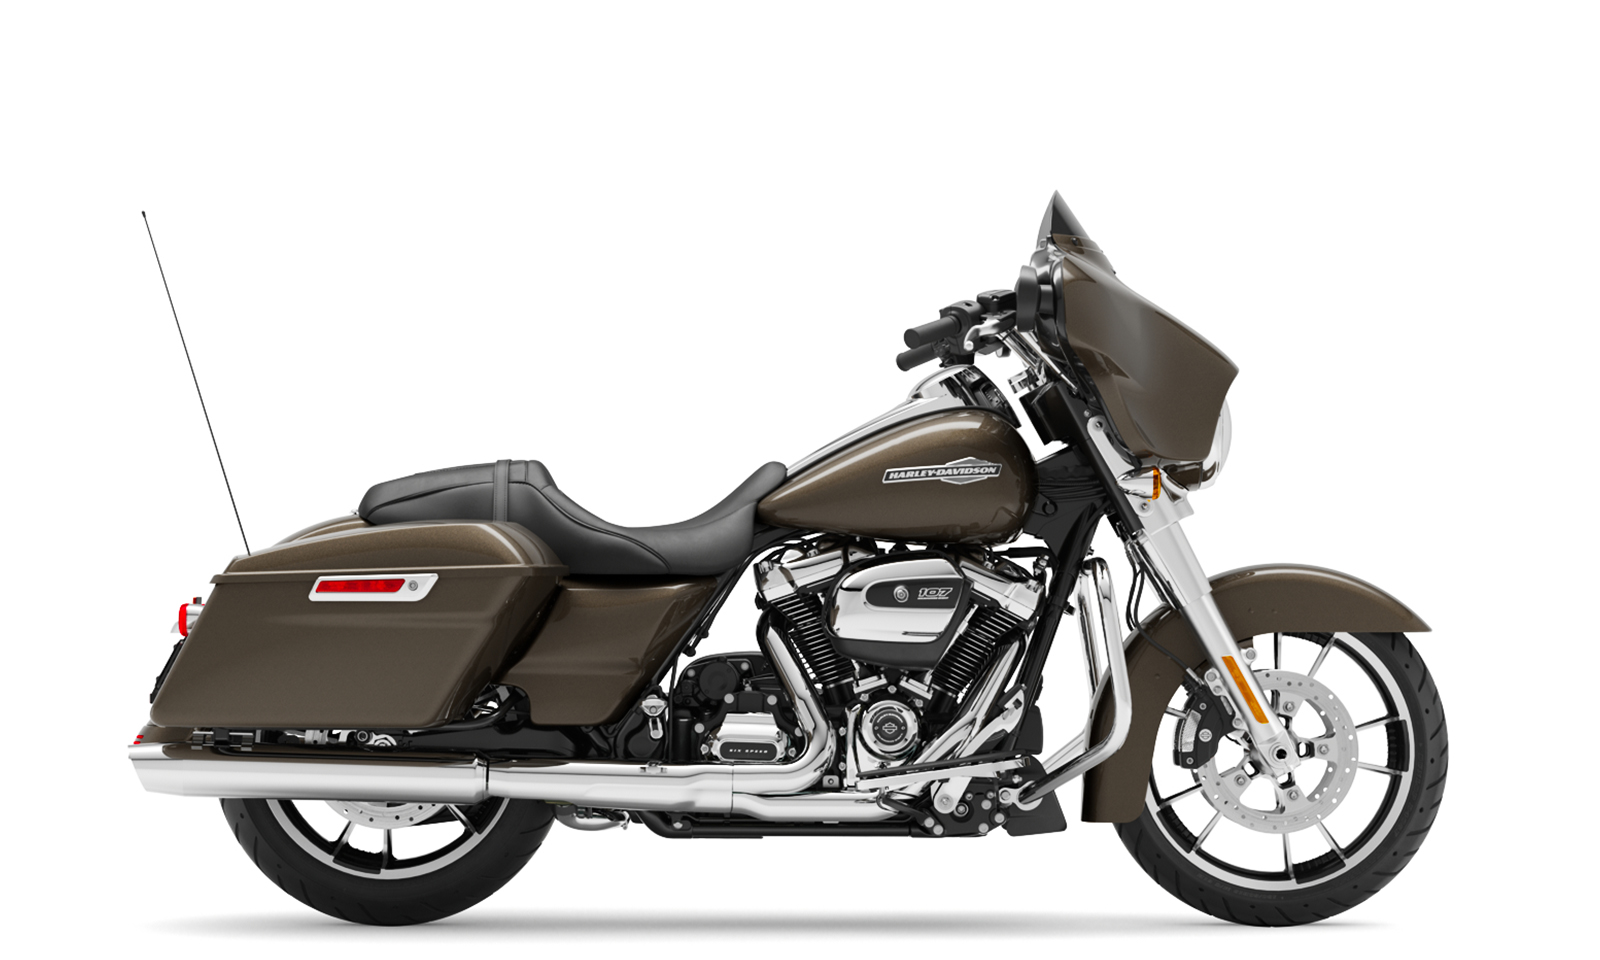 2021 Street Glide Motorcycle | Harley-Davidson USA